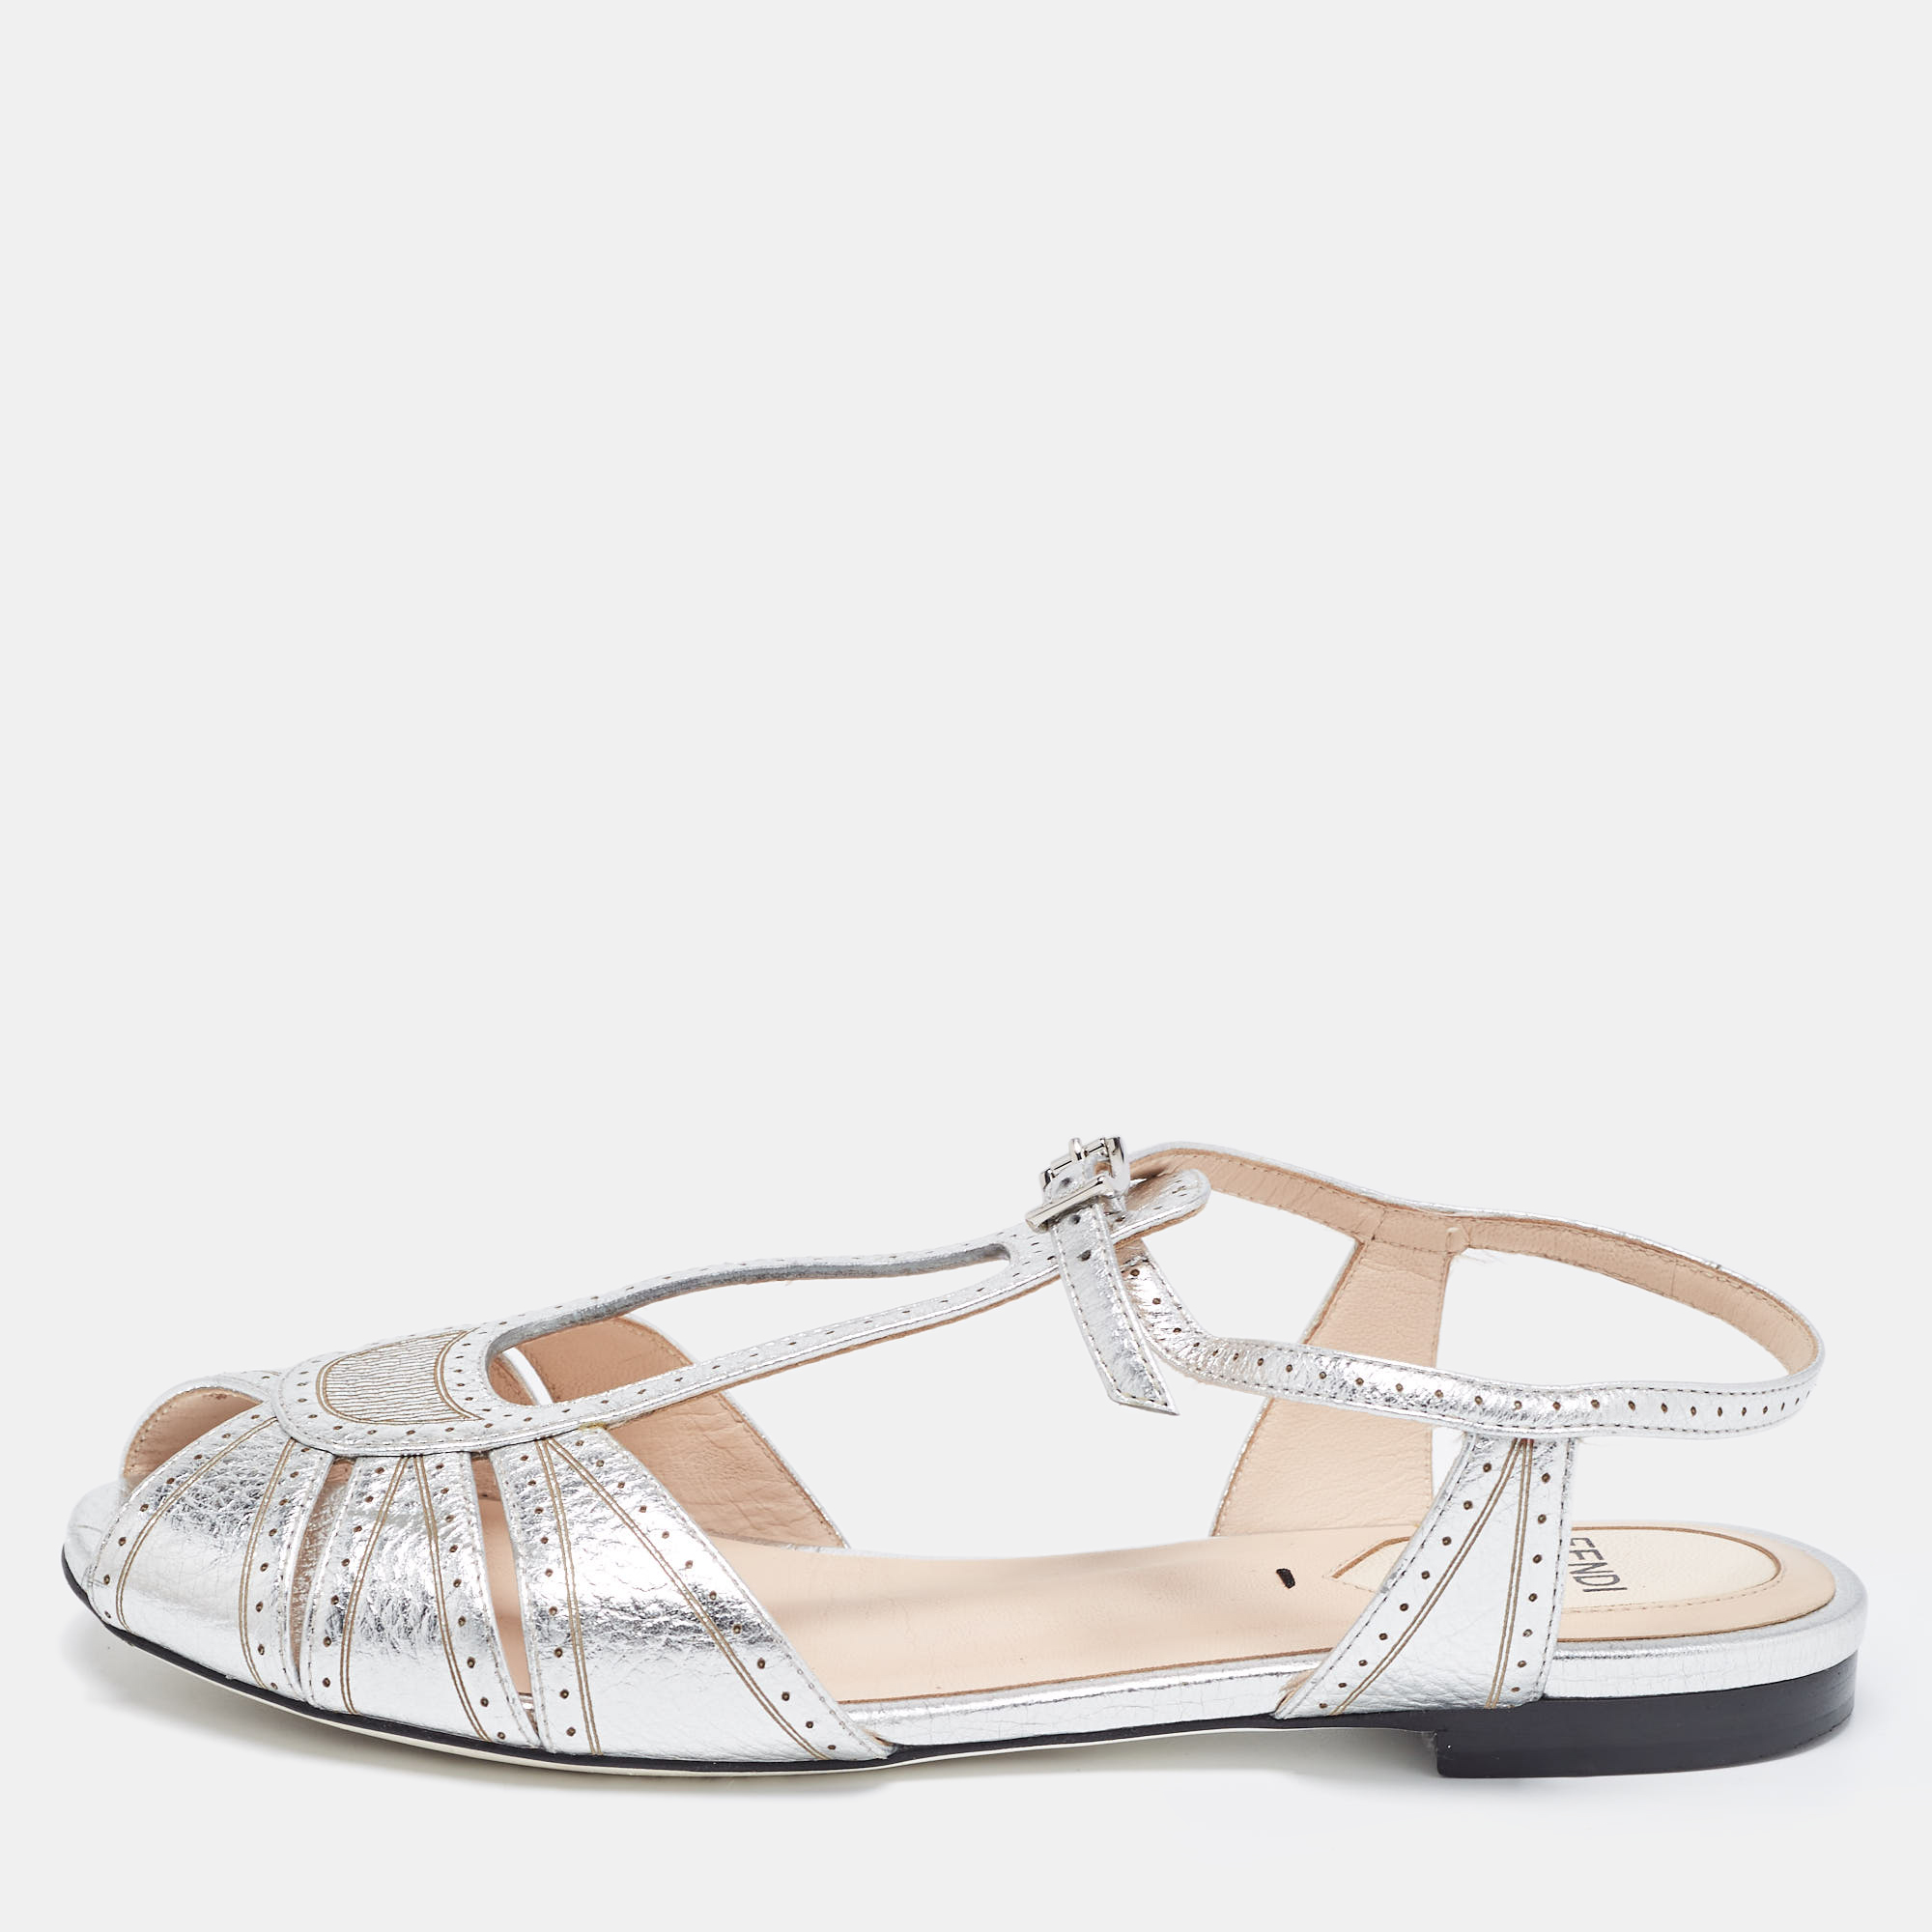 Fendi metallic silver foil leather chameleon ankle strap flat sandals size 36